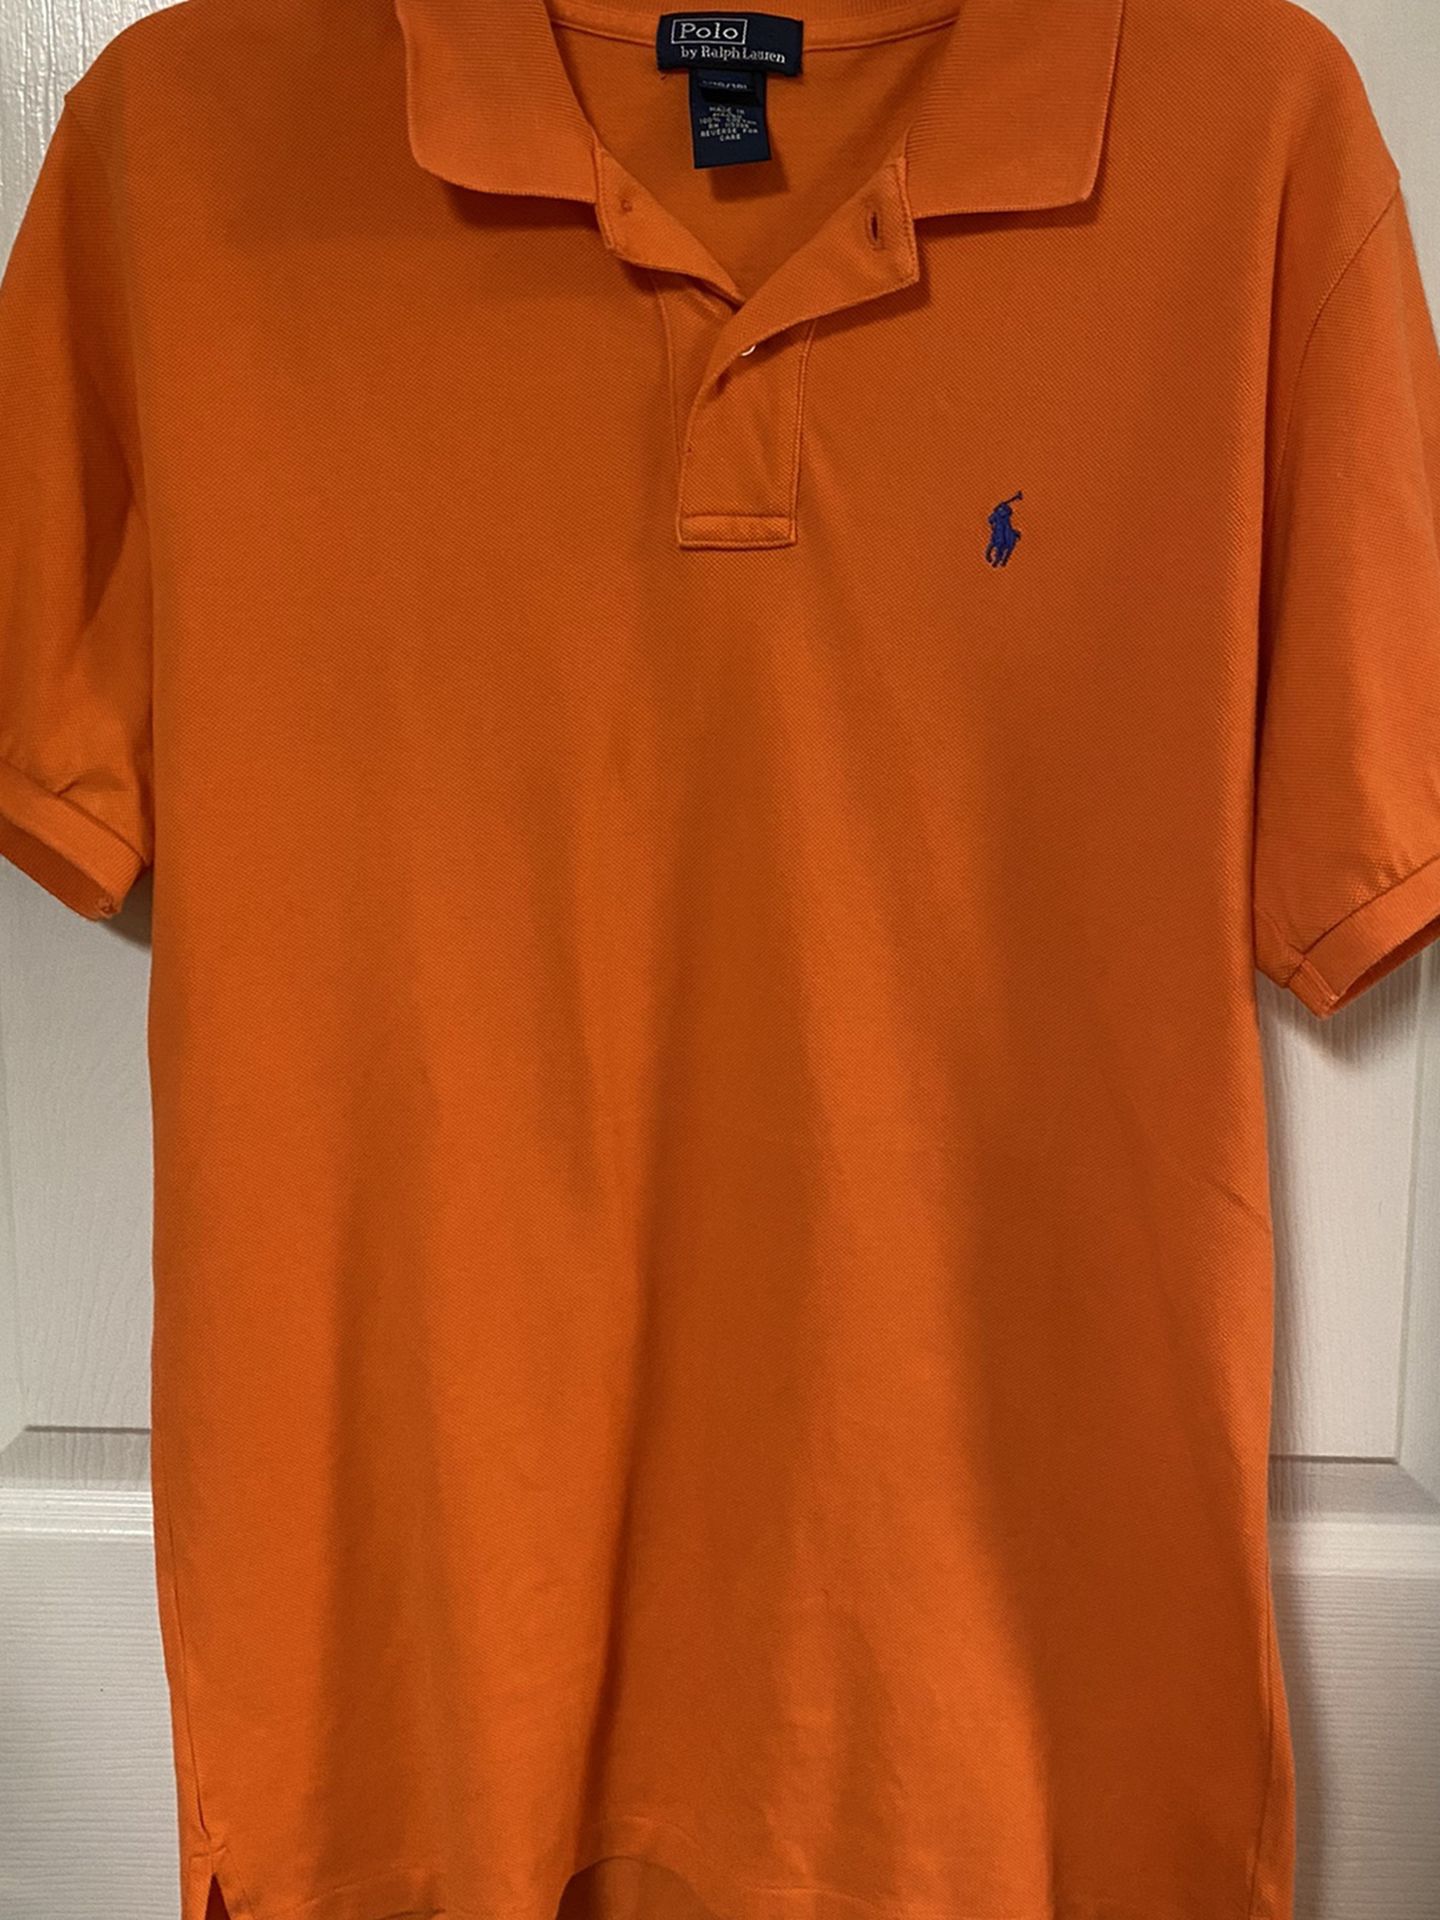 Polo Ralph Lauren Boys L (16-28) Orange Polo Shirt